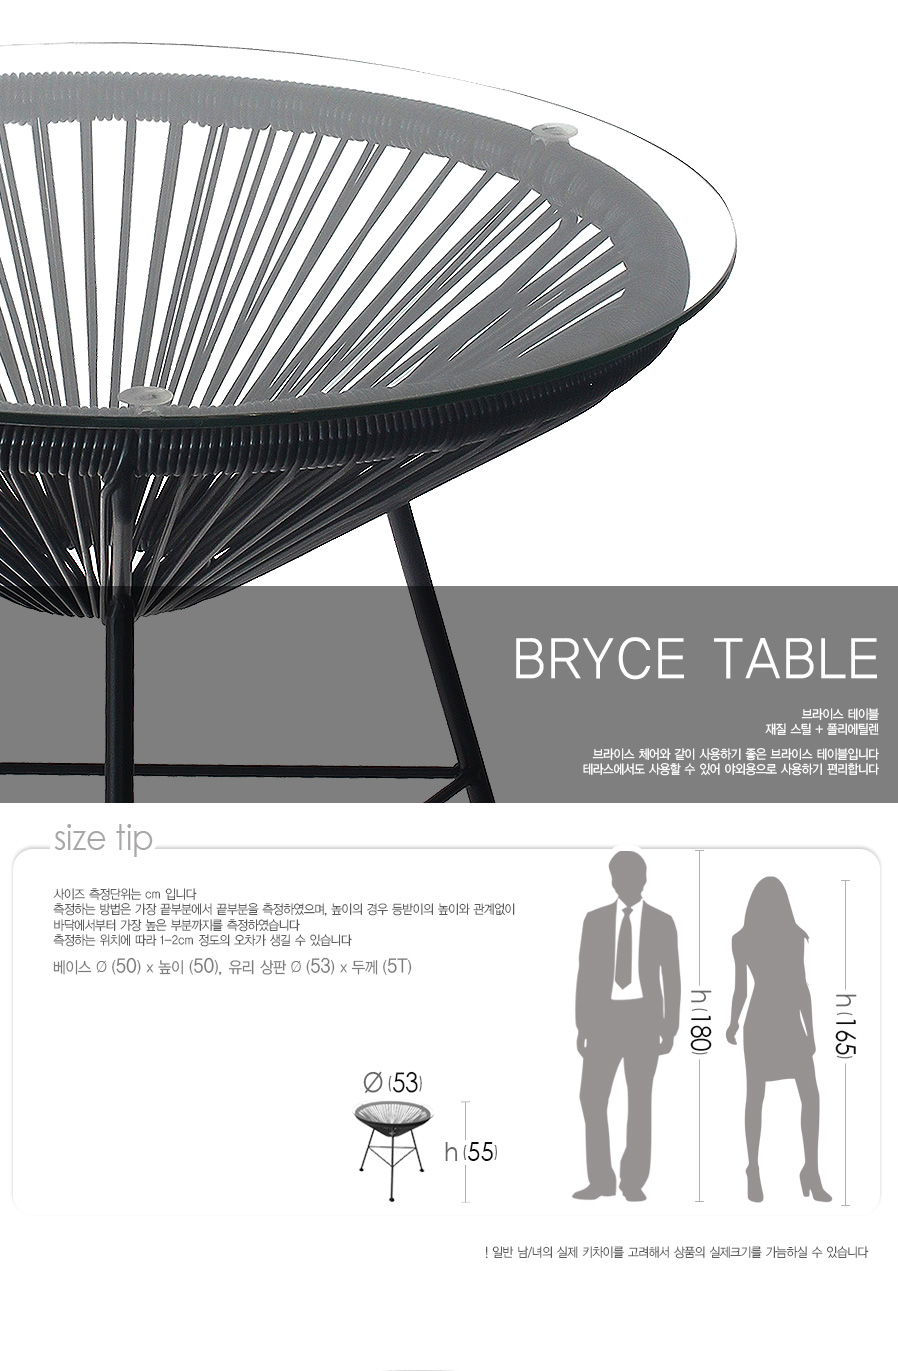 bryce-table(브라이스-테이블)_01.jpg